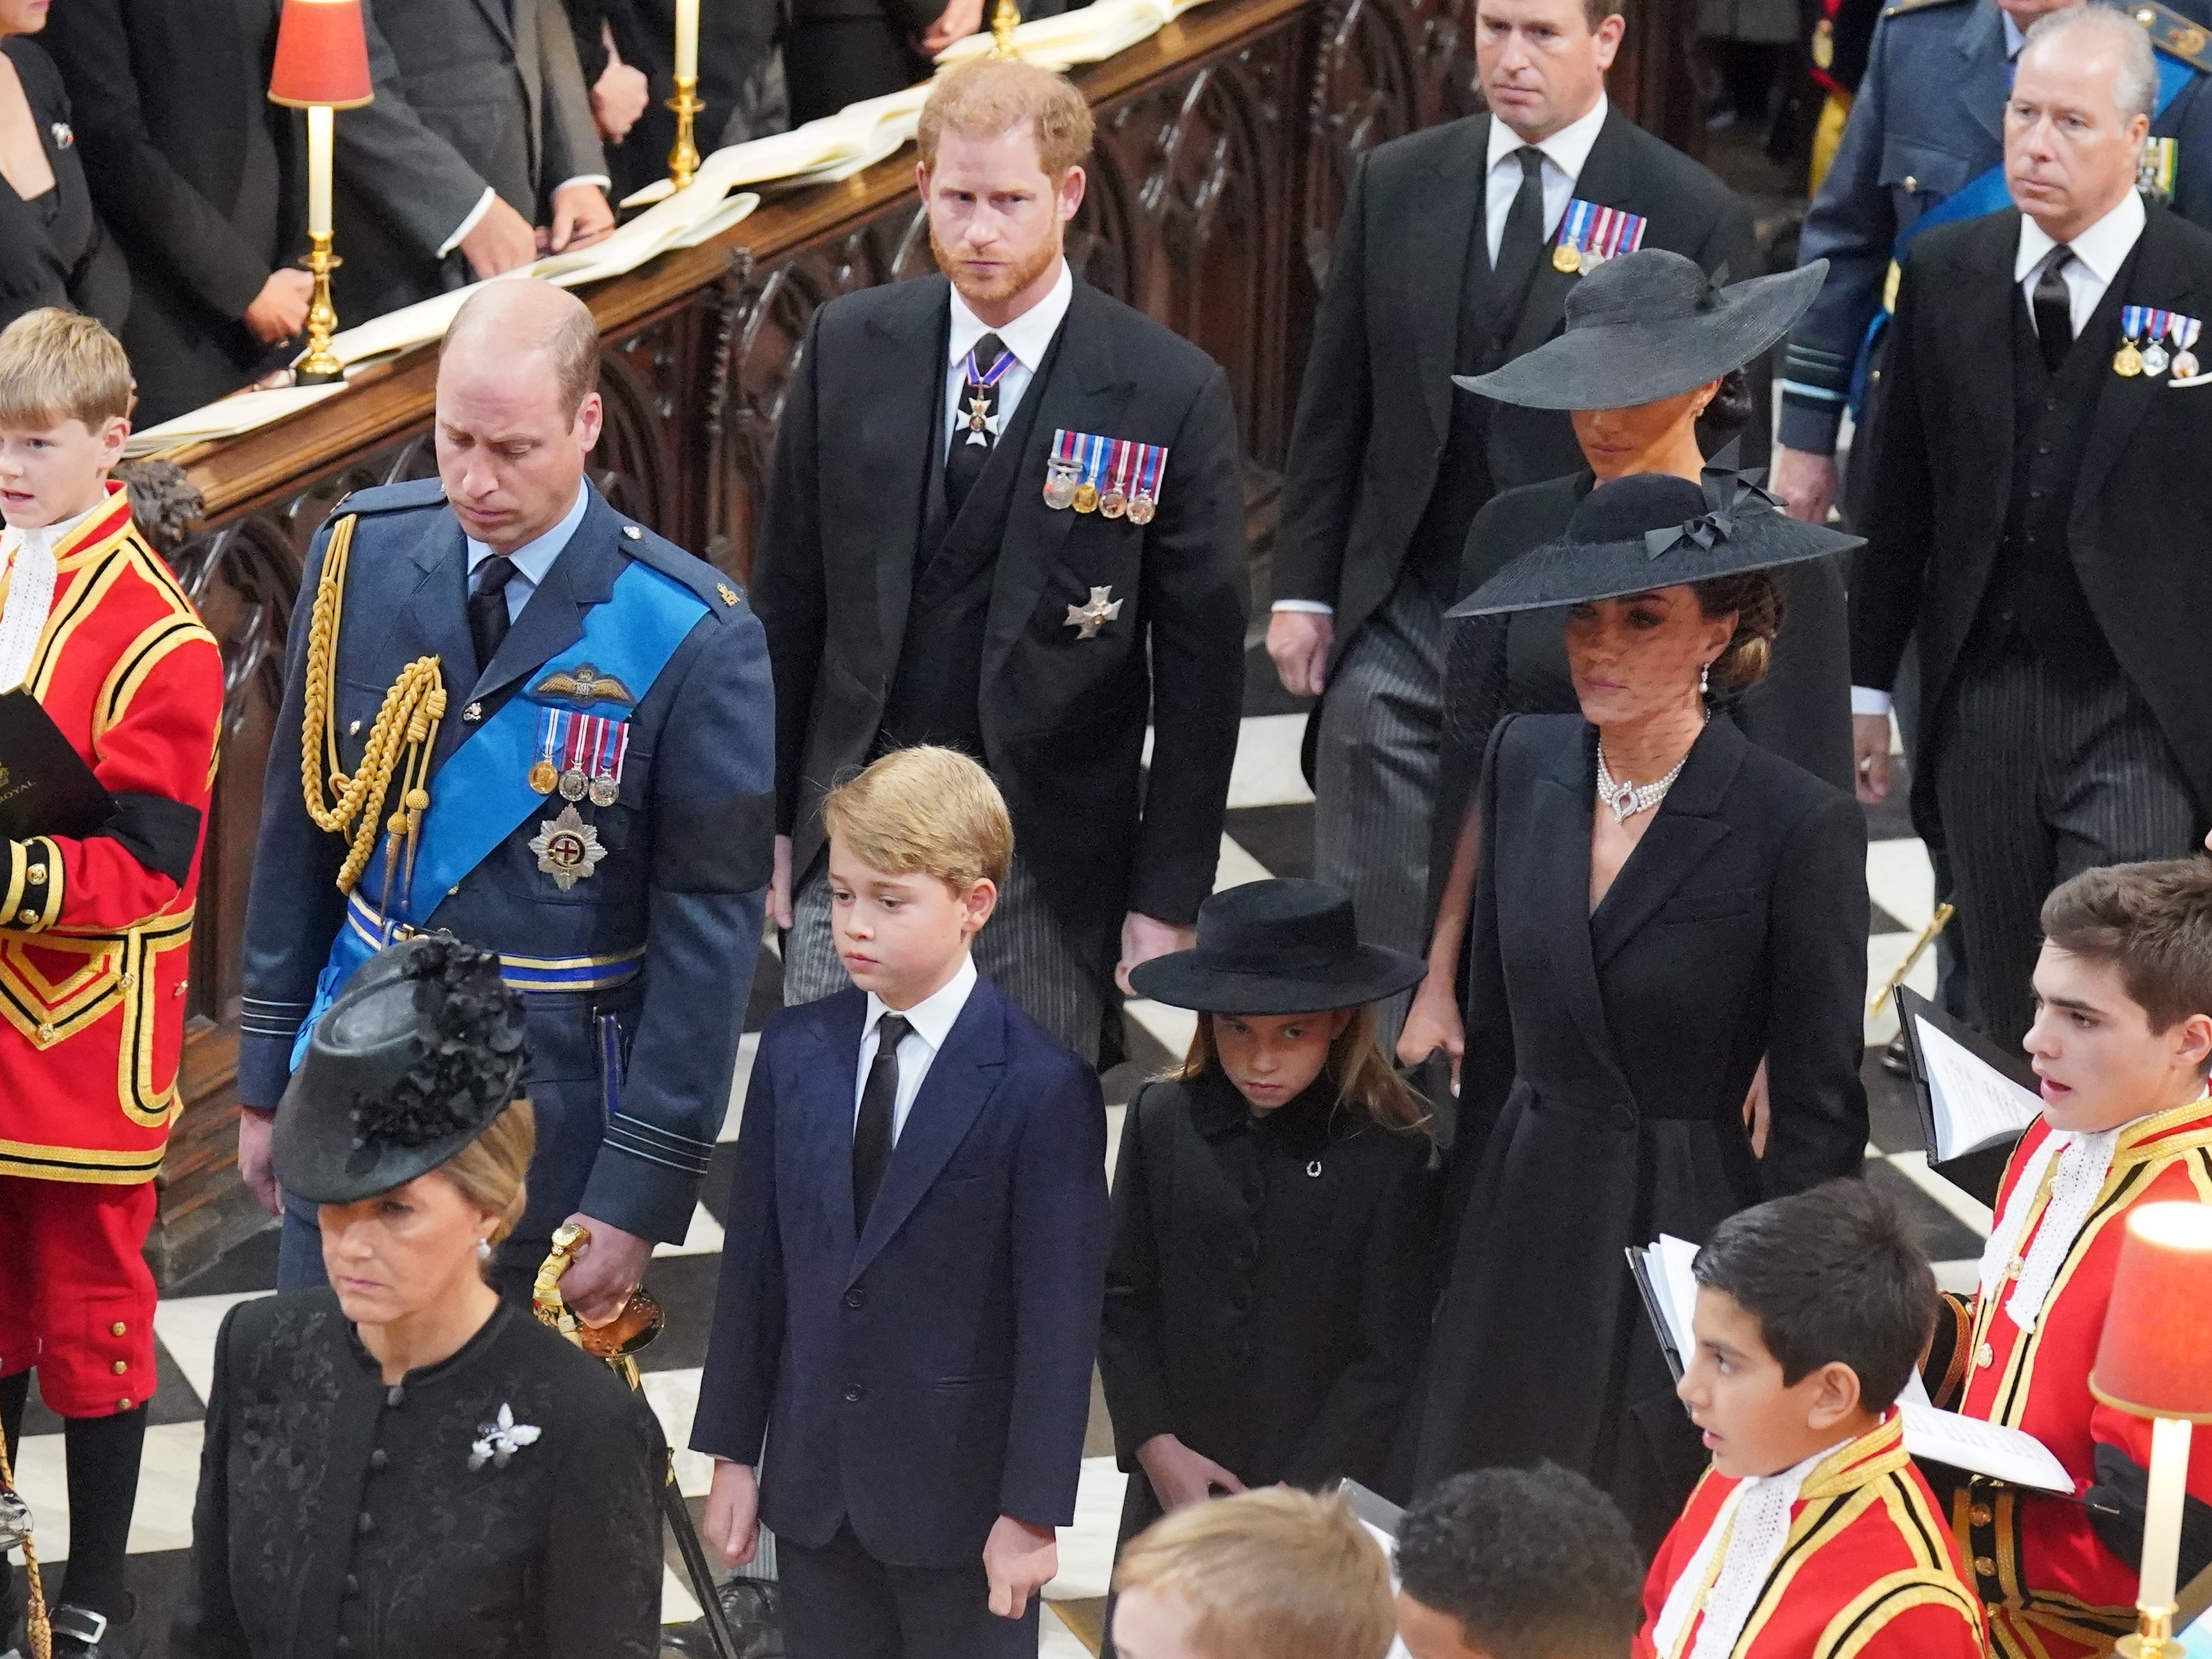 The royal family entering the abbey (Dominic Lipinski/PA)